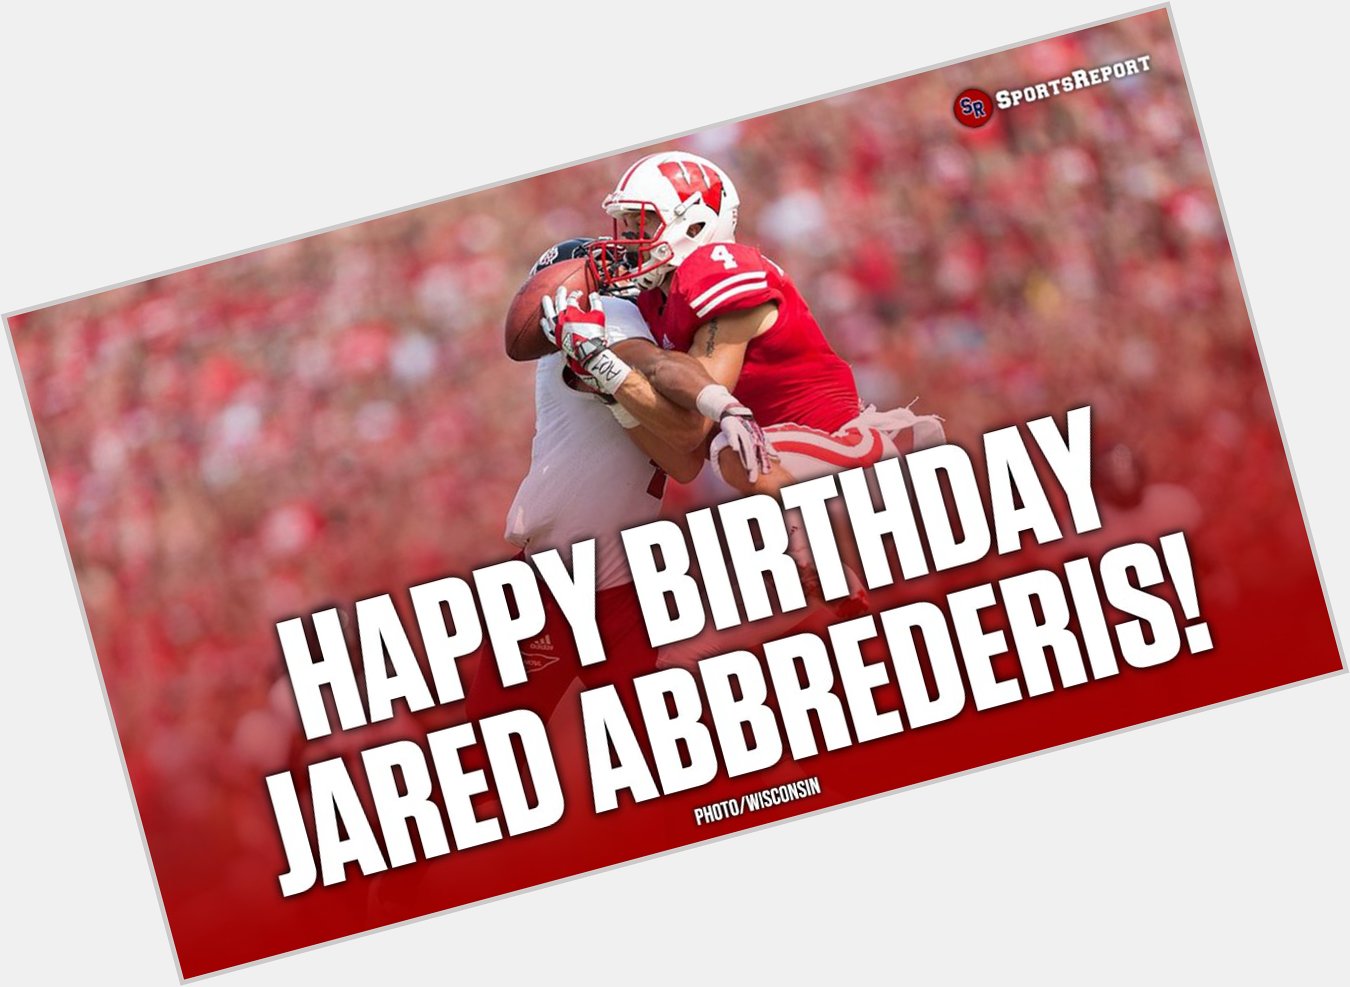  Fans, let\s wish Jared Abbrederis a Happy Birthday! 